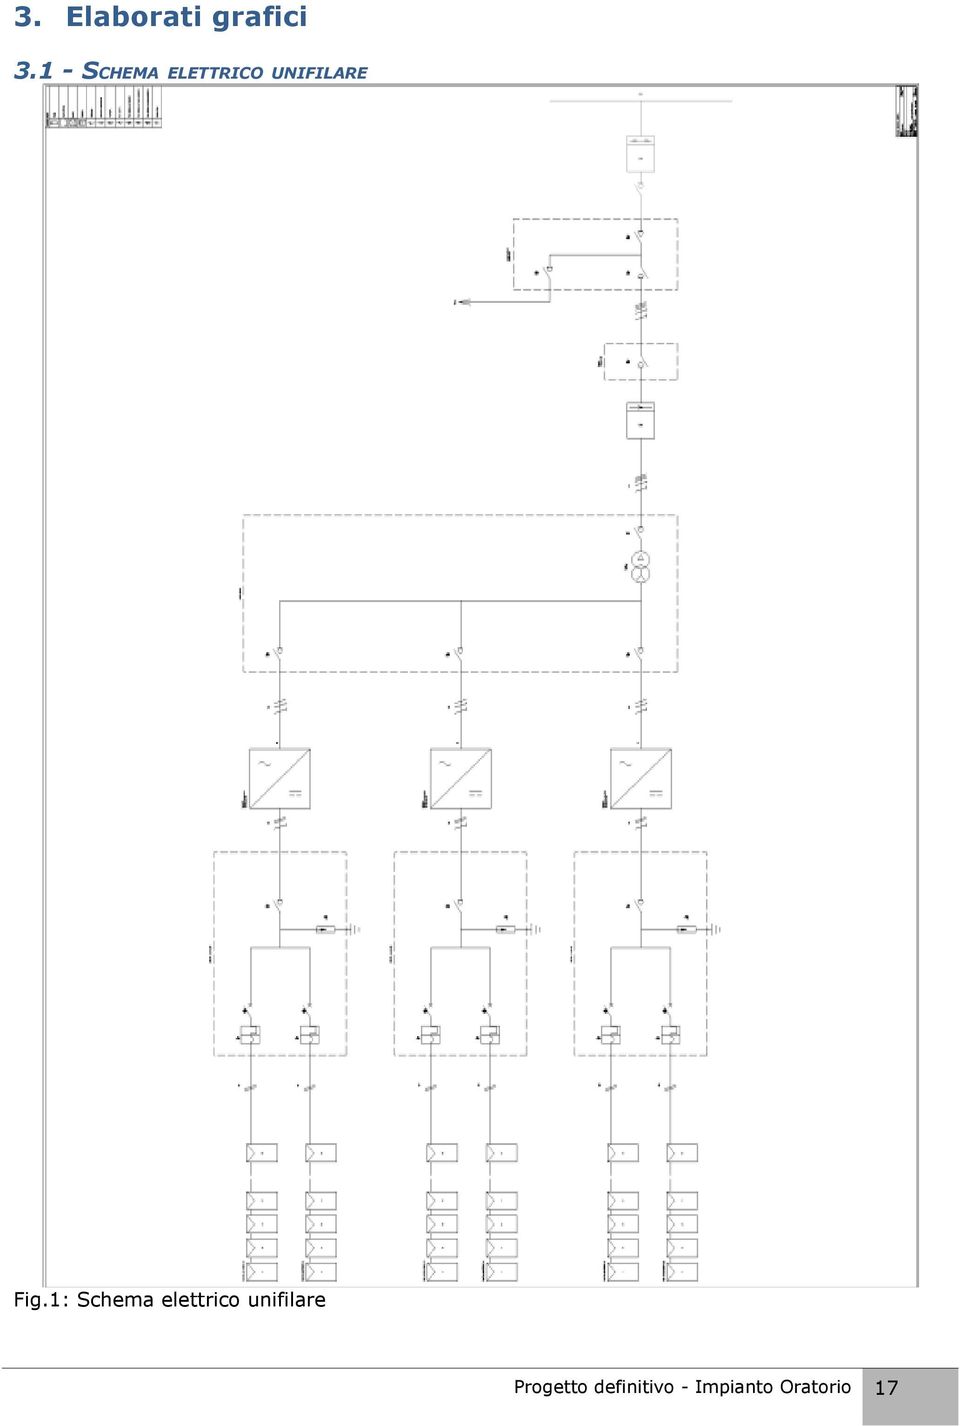 Fig.1: Schema elettrico